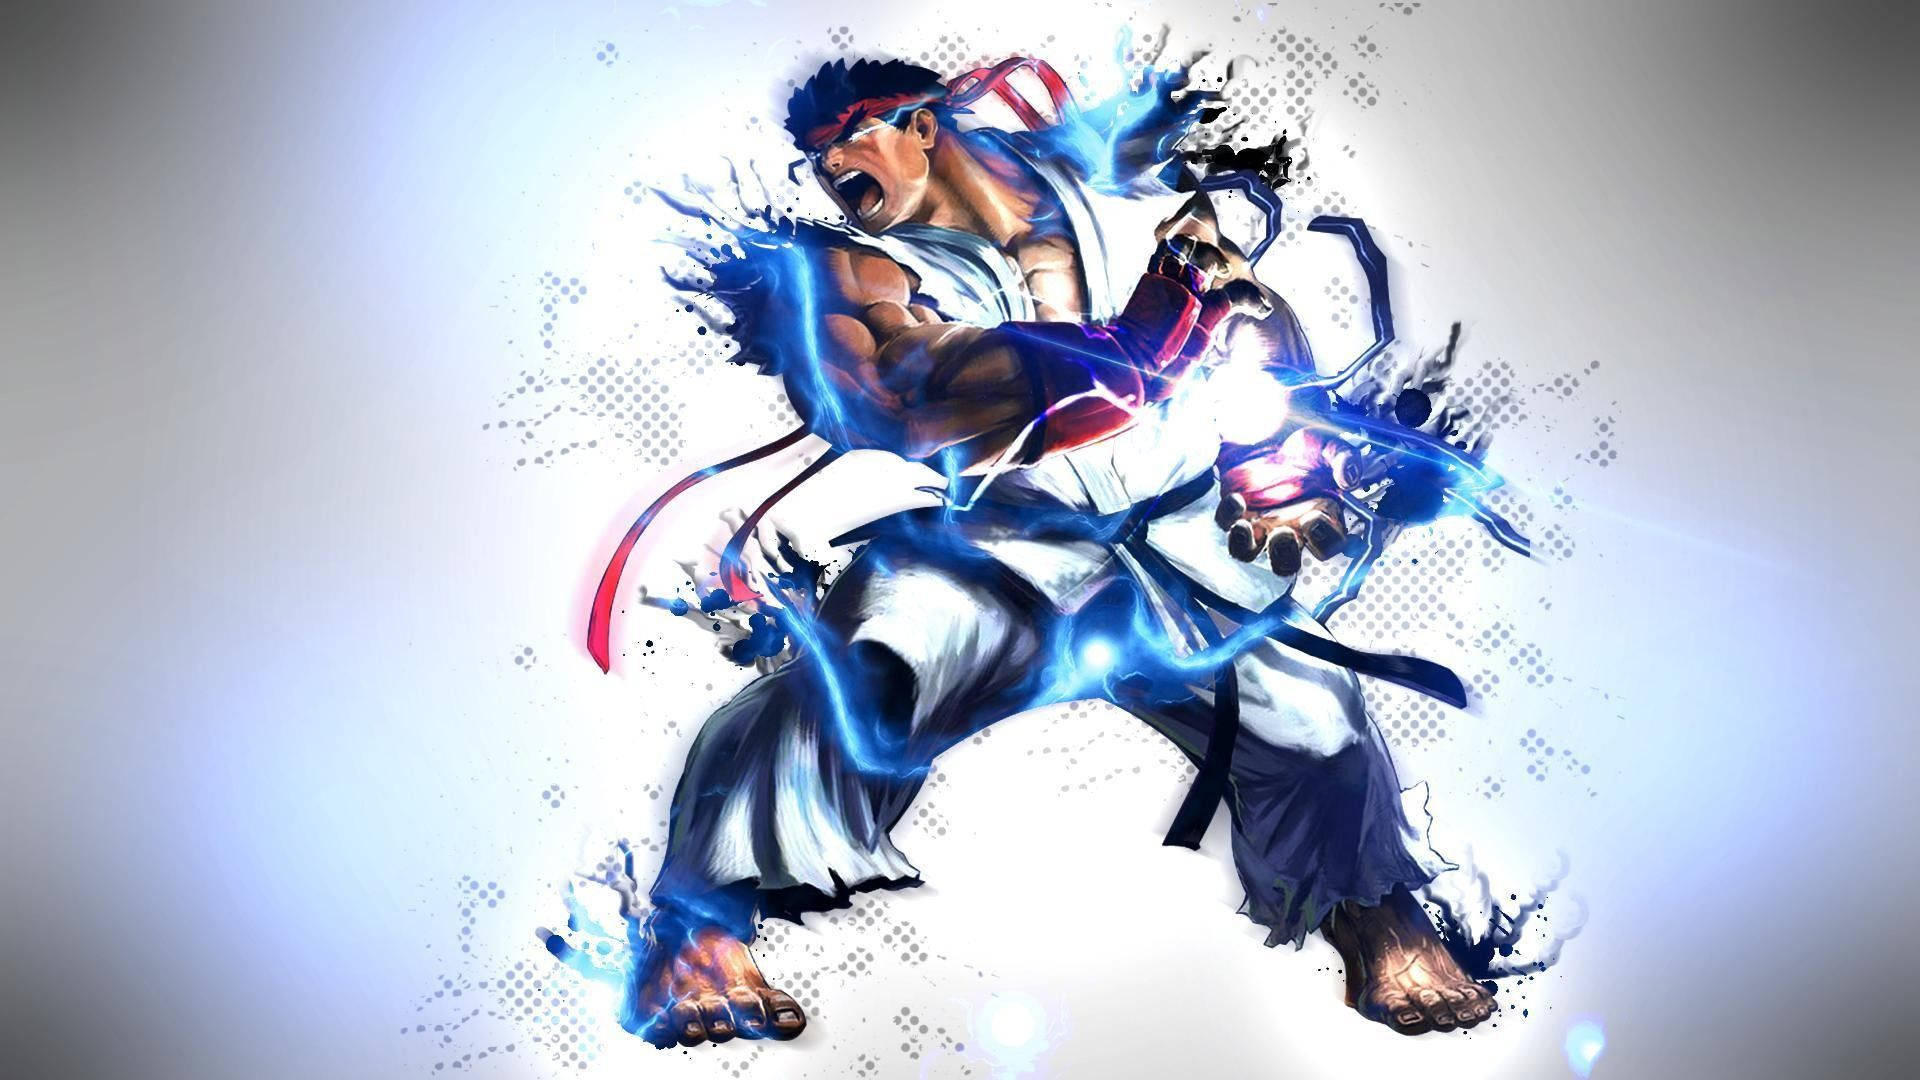 Blazing Ryu Of Street Fighter Wallpaper